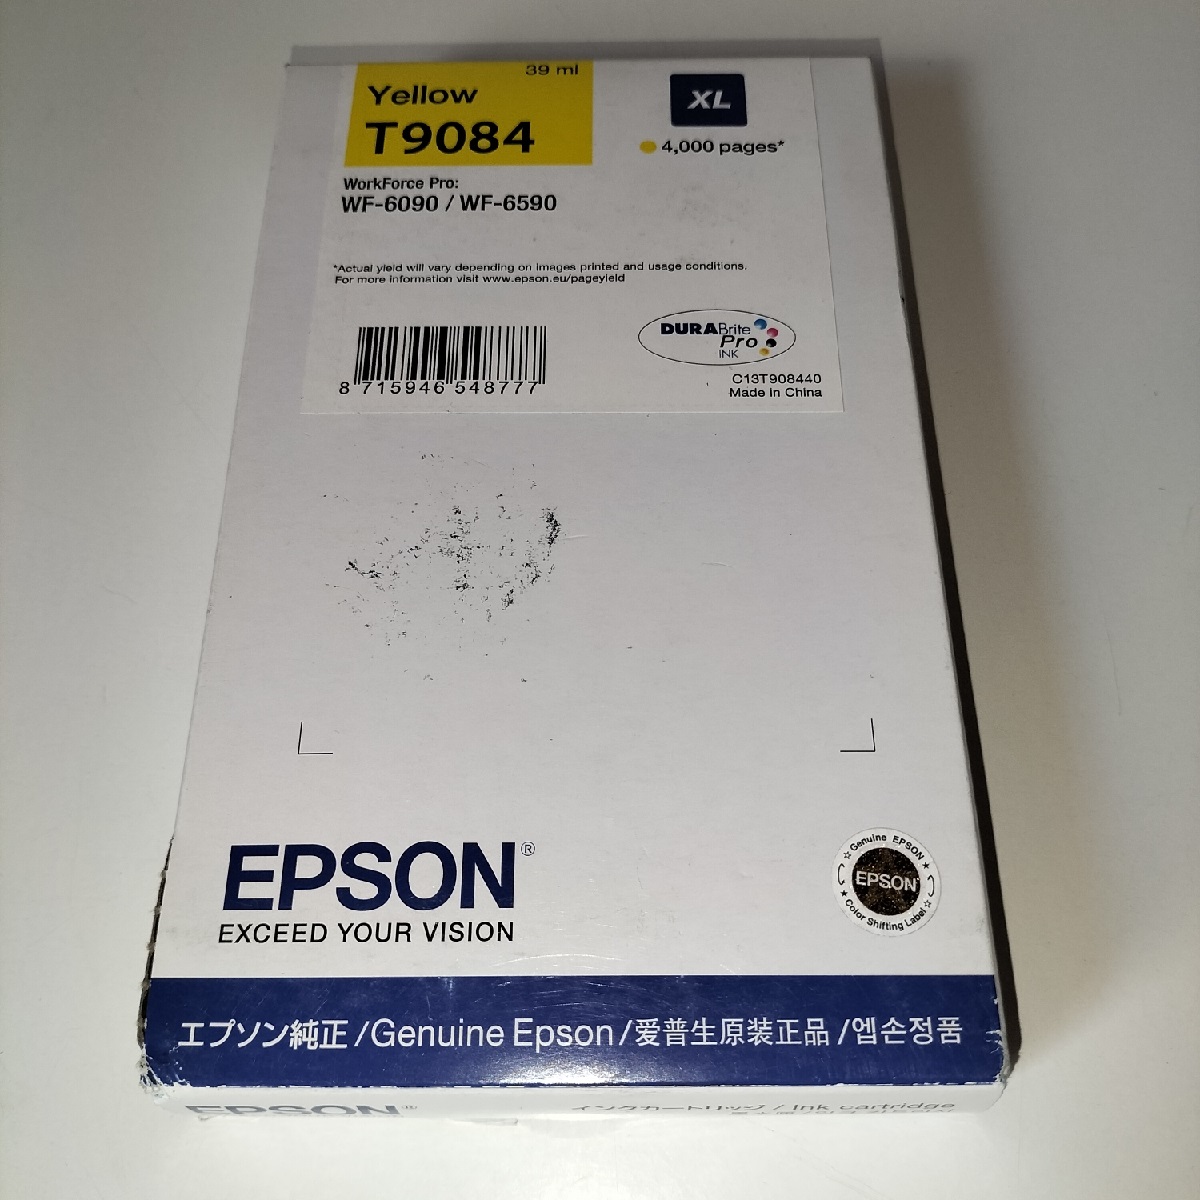 Epson T9084 XL CT13T908440 Tinta original amarillo para WorkForce Pro WF-6090 / WF-6590